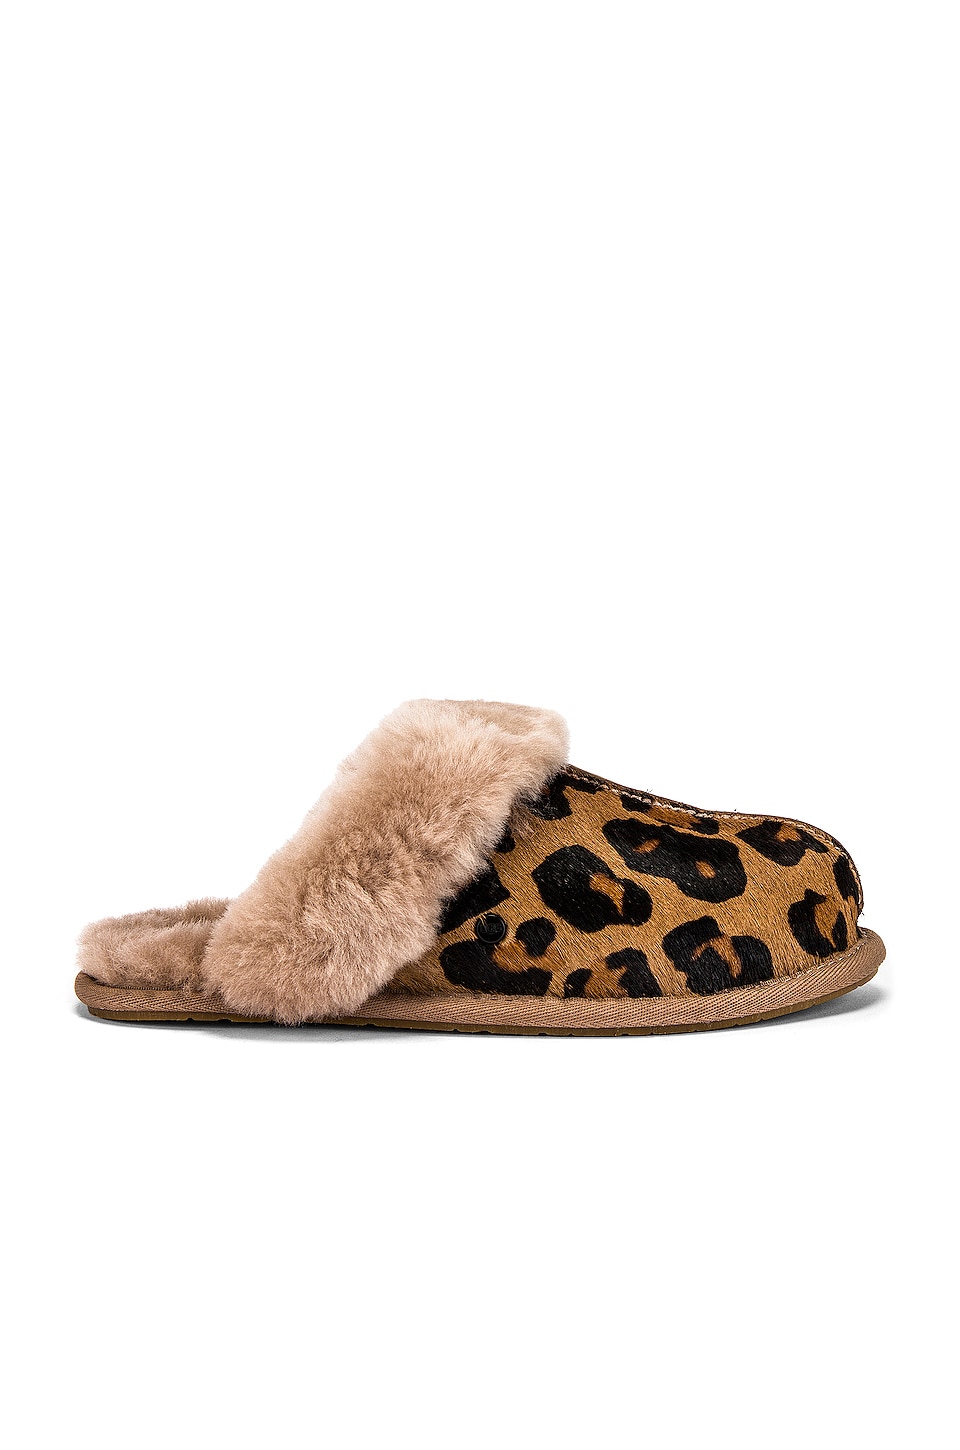 ugg cheetah print slippers